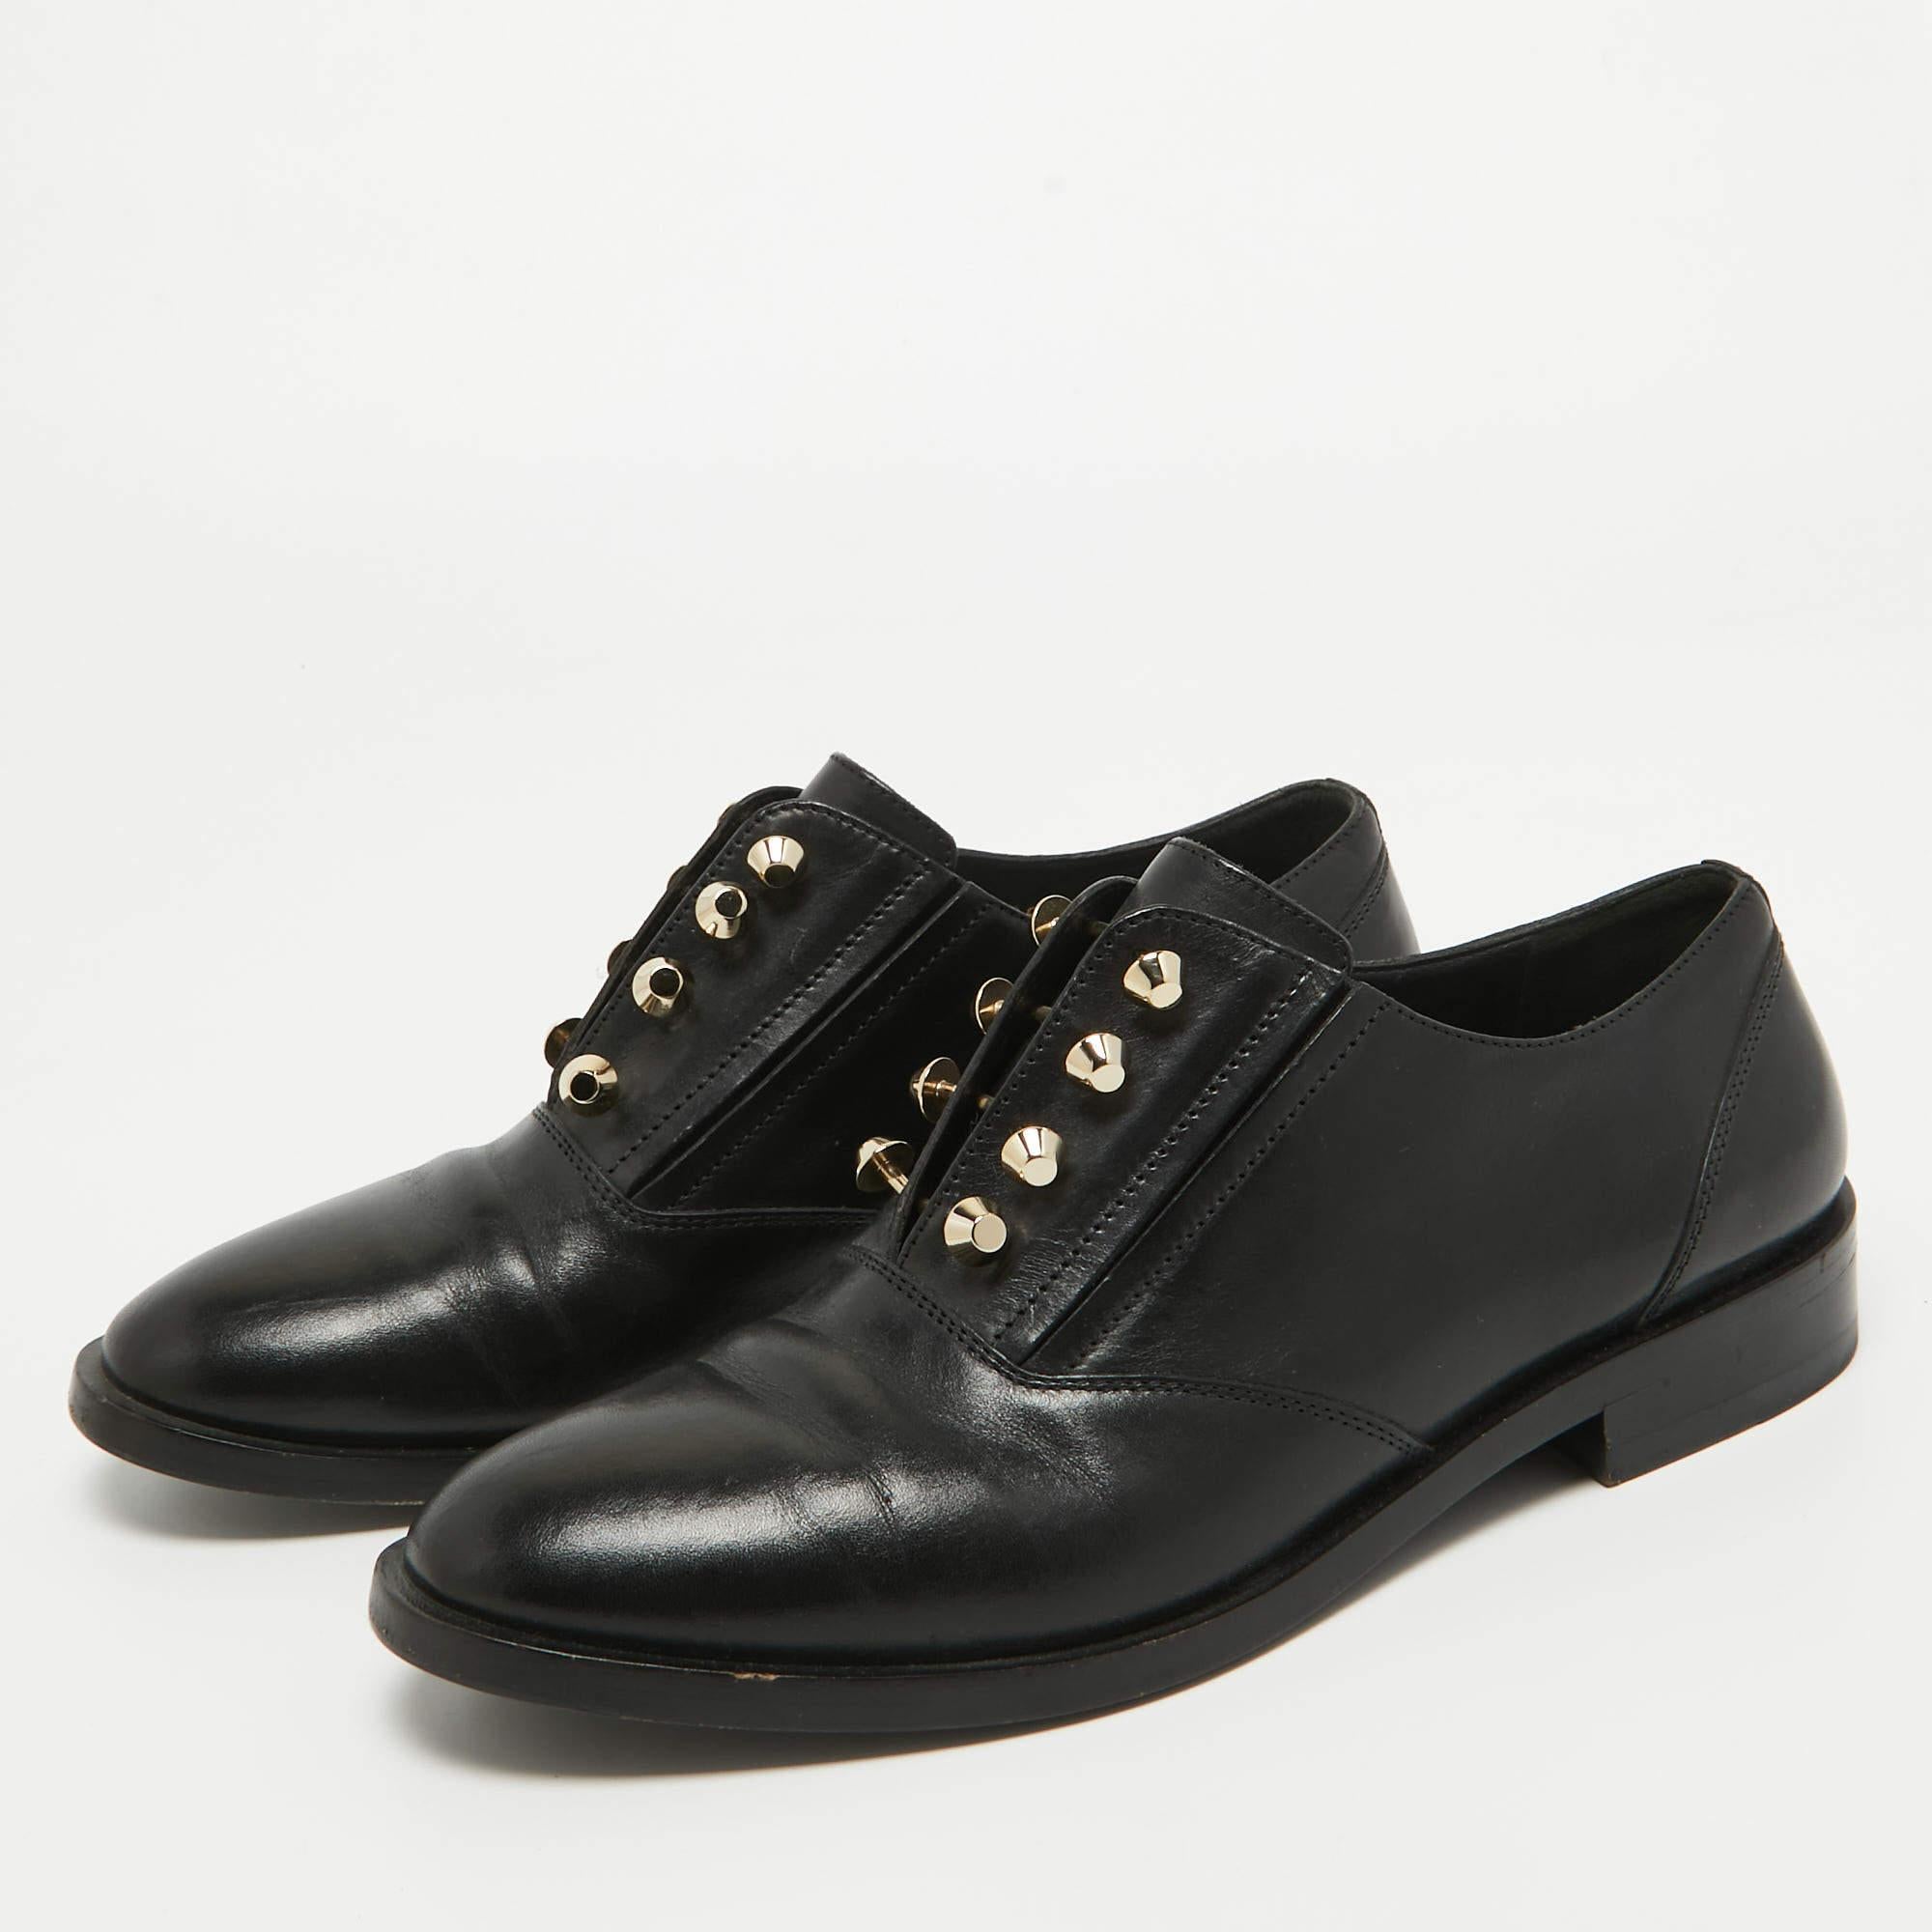 Balenciaga Black Leather Slip On Oxfords Size 39.5 For Sale 2